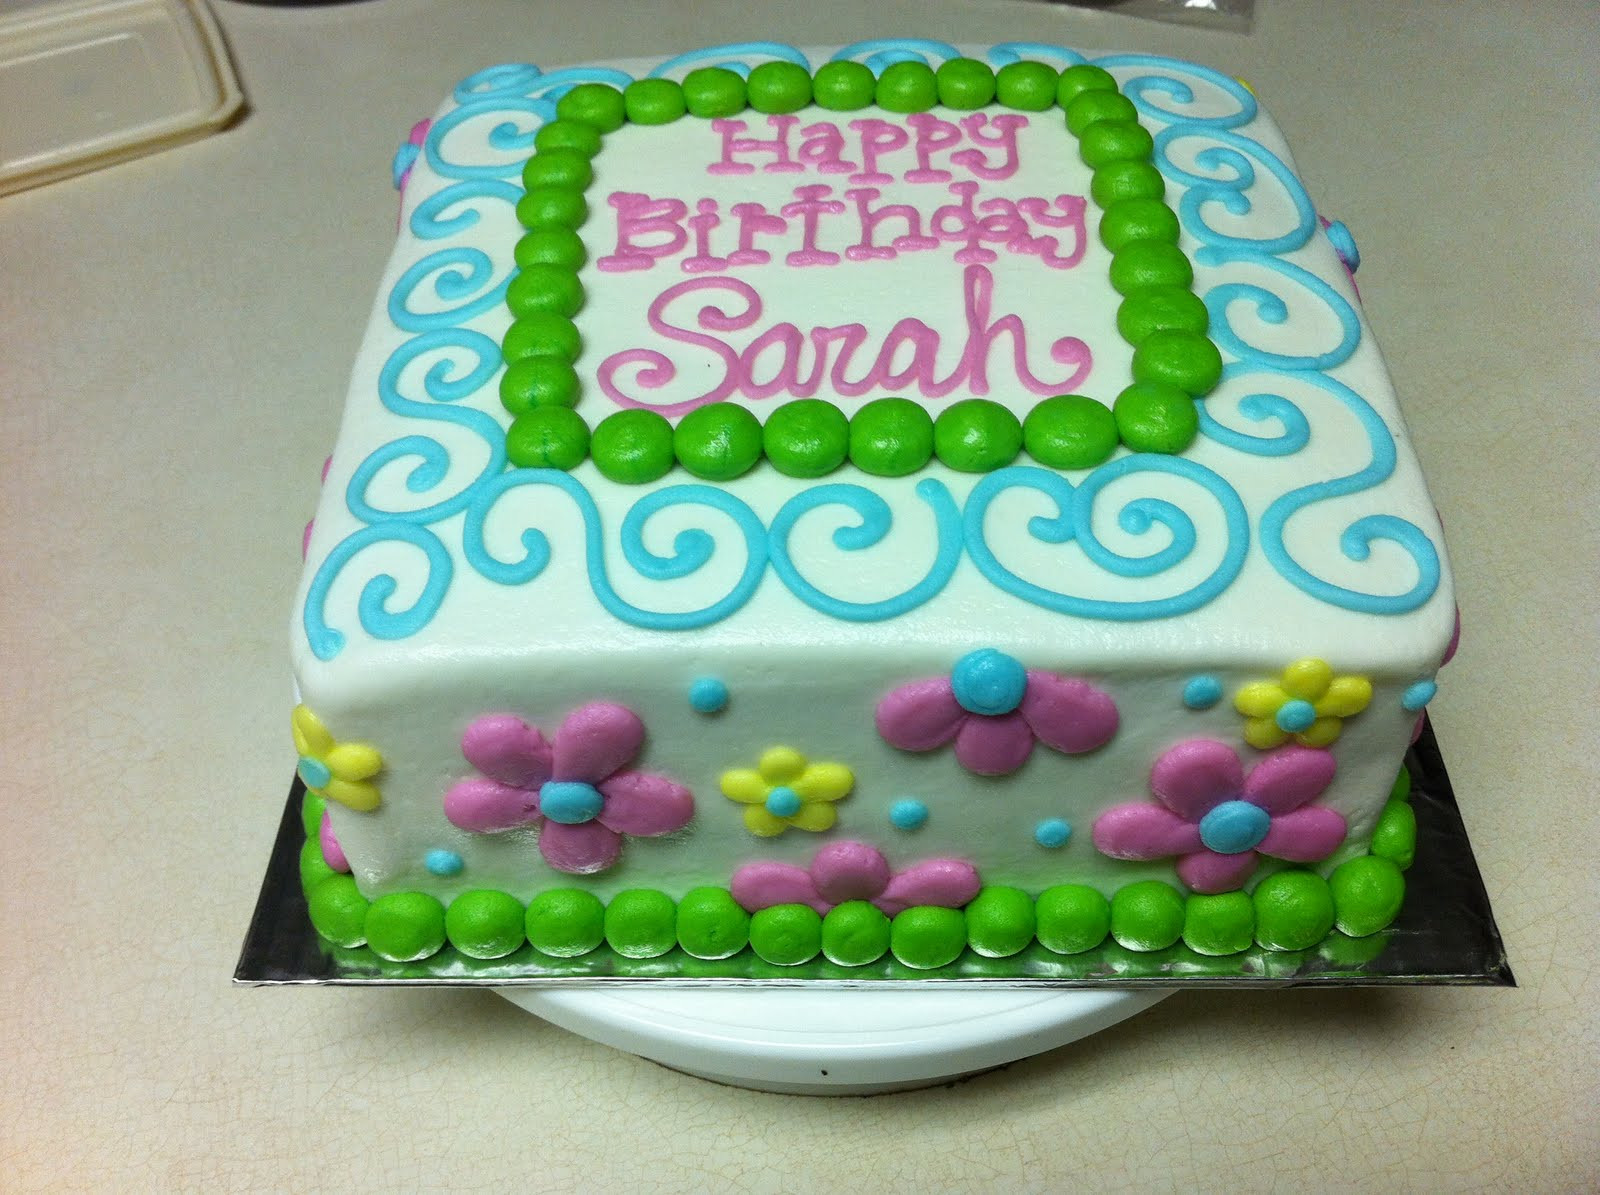 Happy Birthday Sarah Cake
 Baby Cakes January 2012